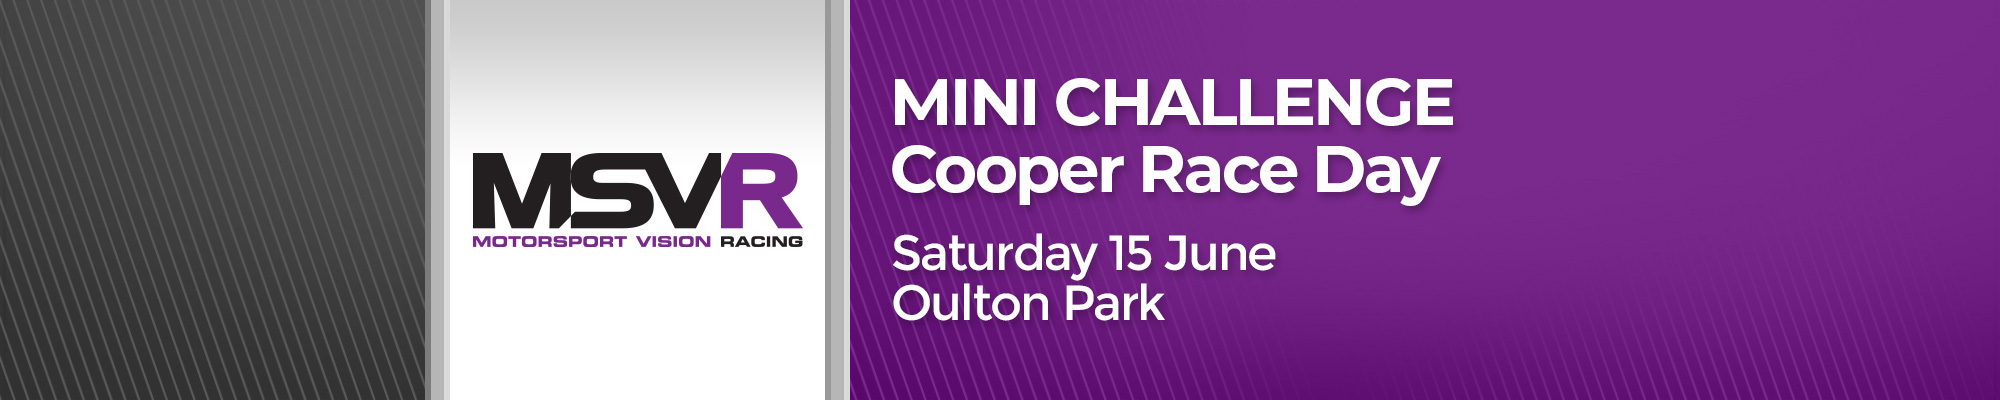 MINI CHALLENGE Cooper Race Day